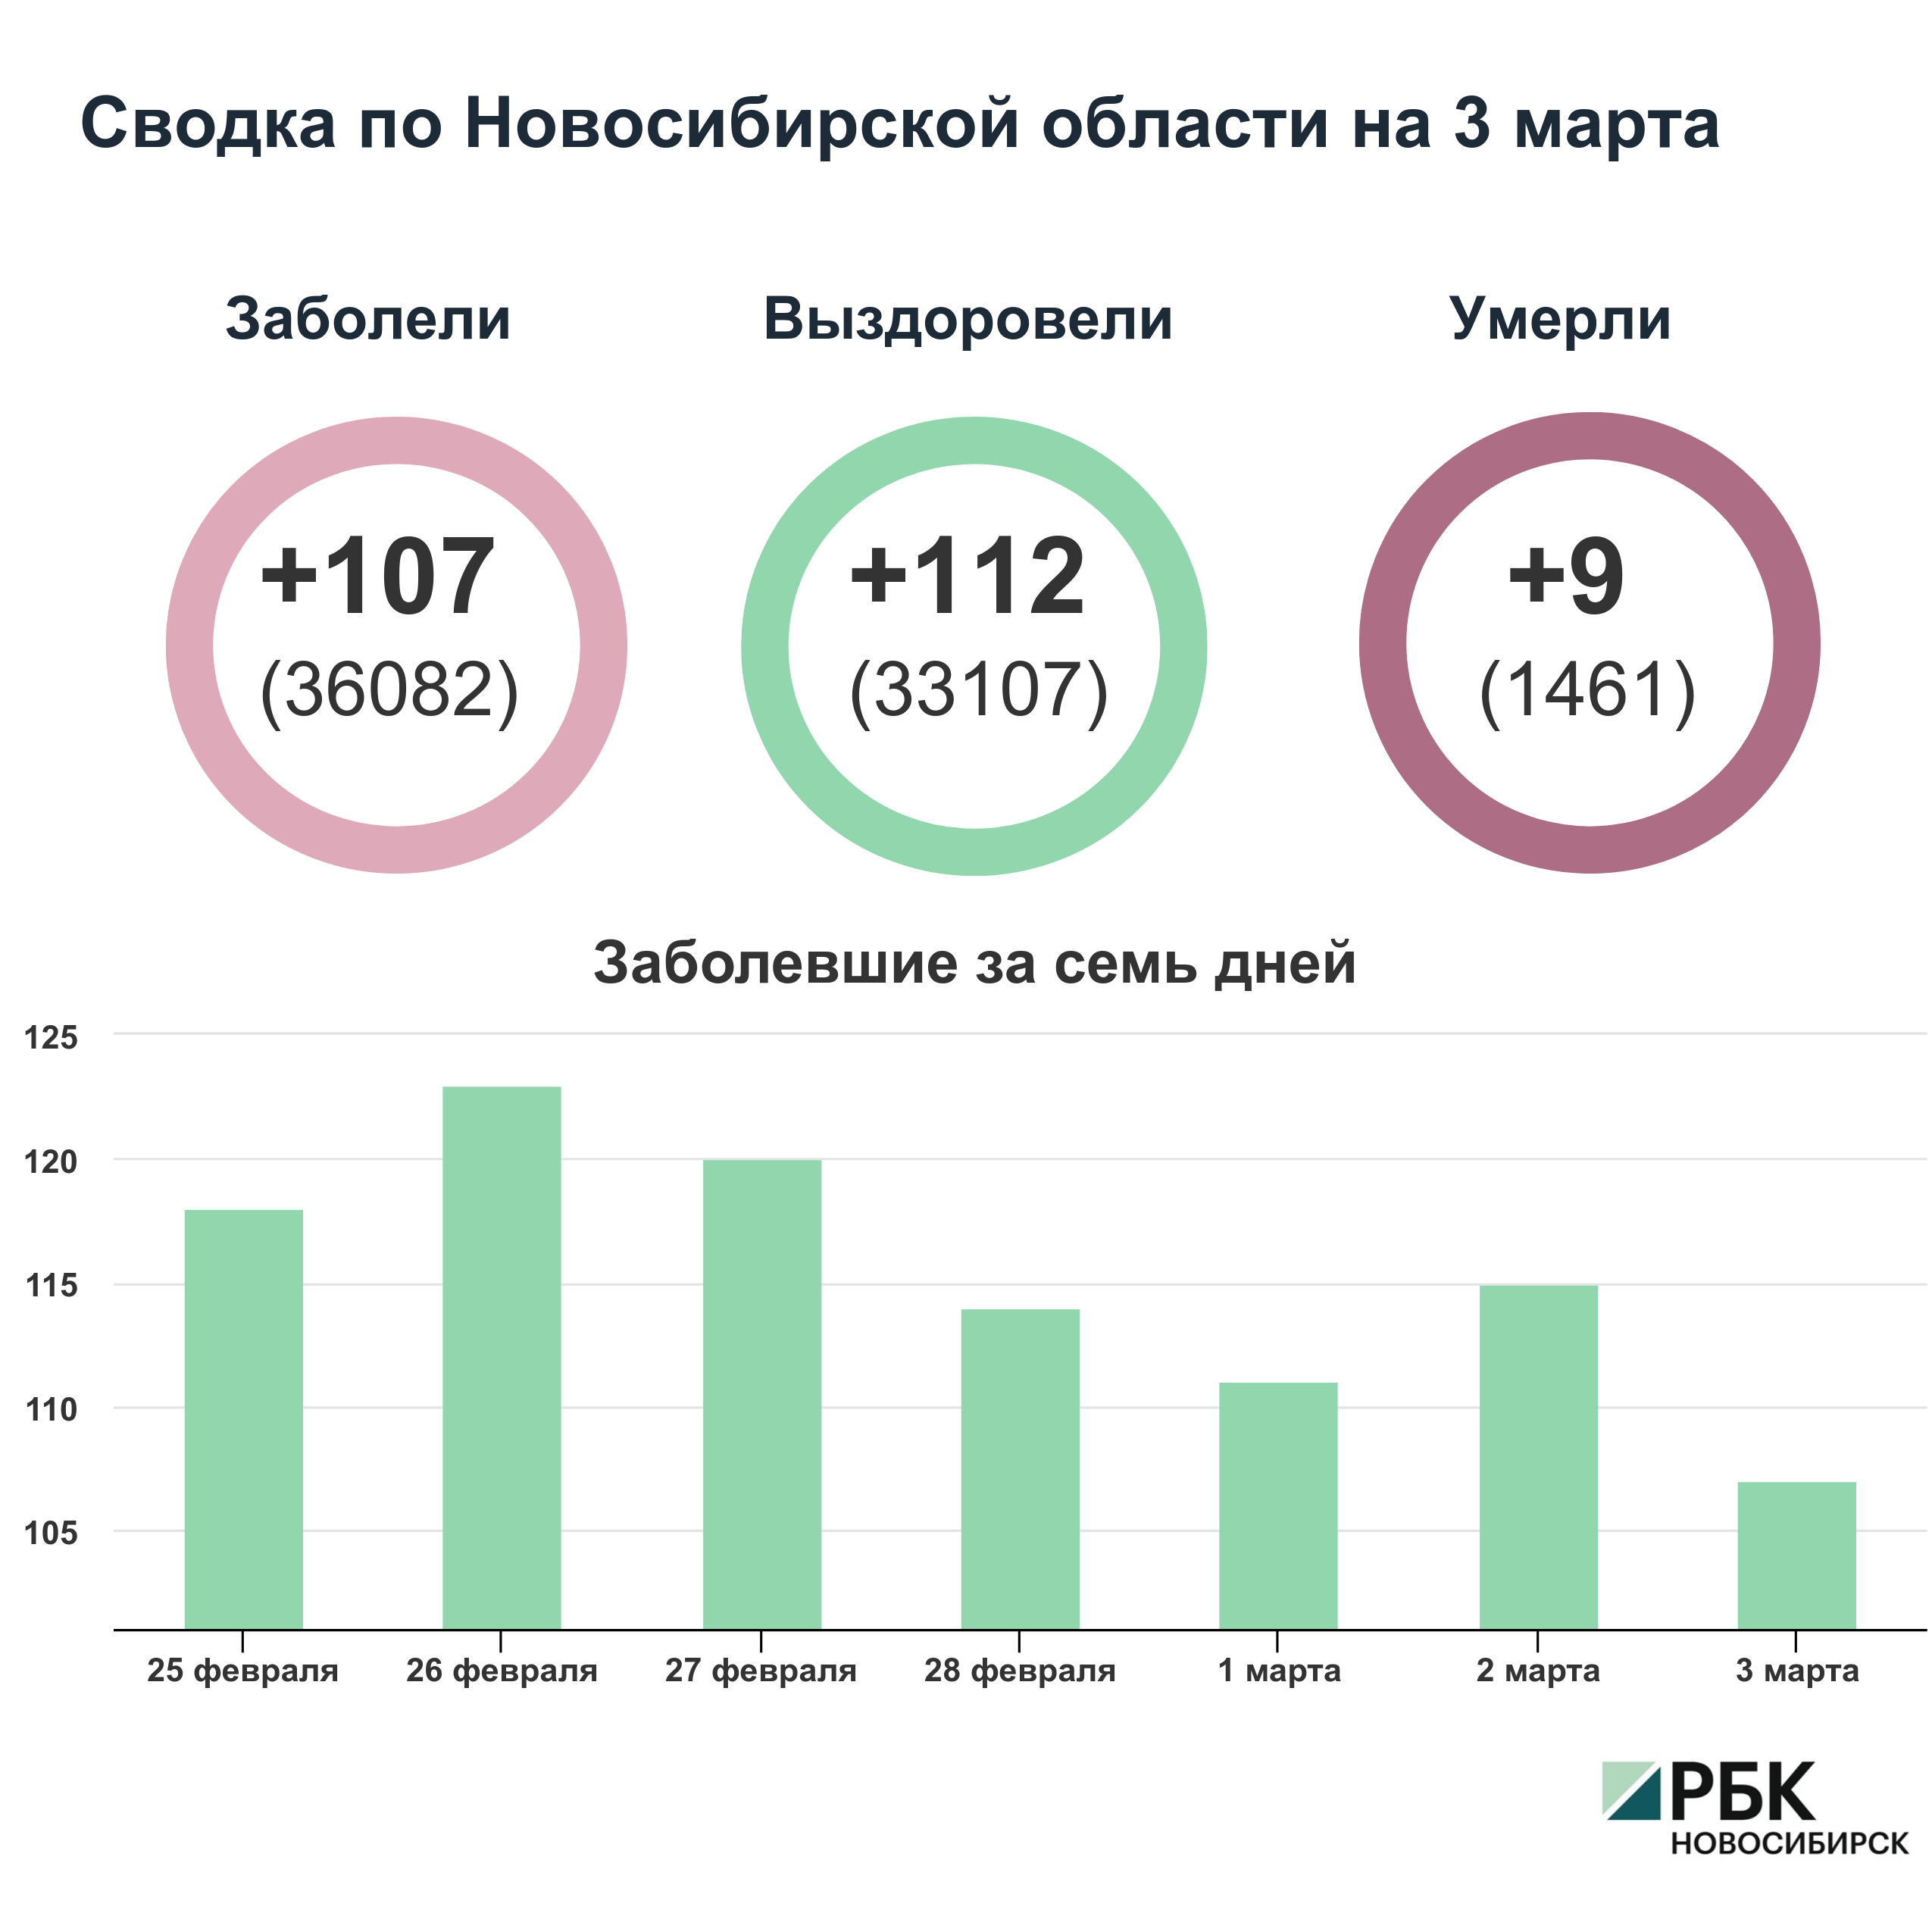 Коронавирус в Новосибирске: сводка на 3 марта